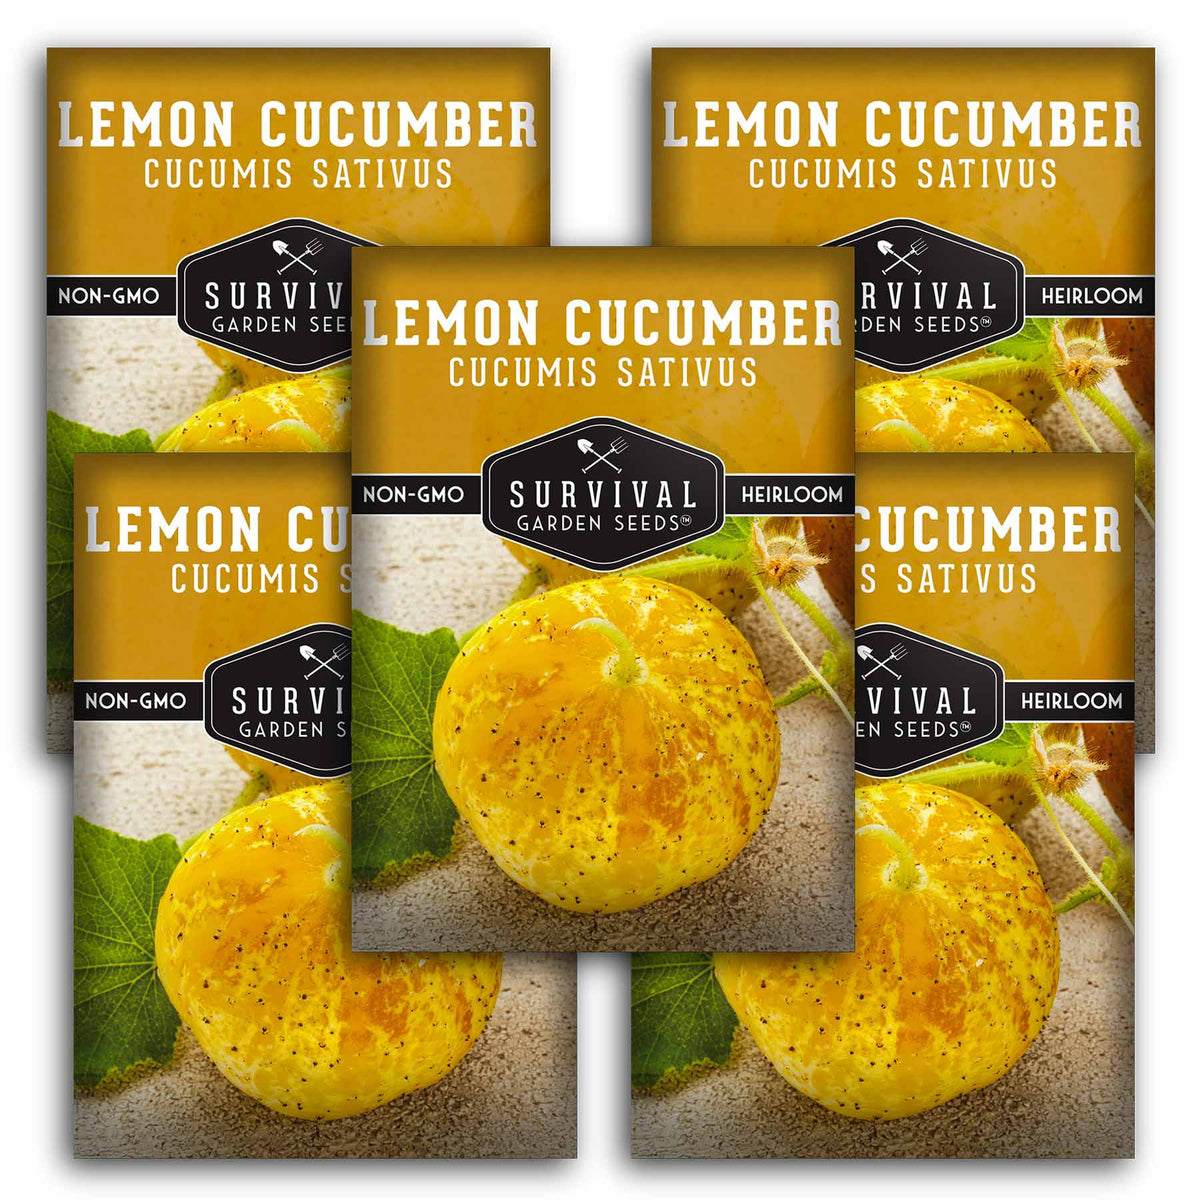 5 packets of Lemon Cucumber seeds